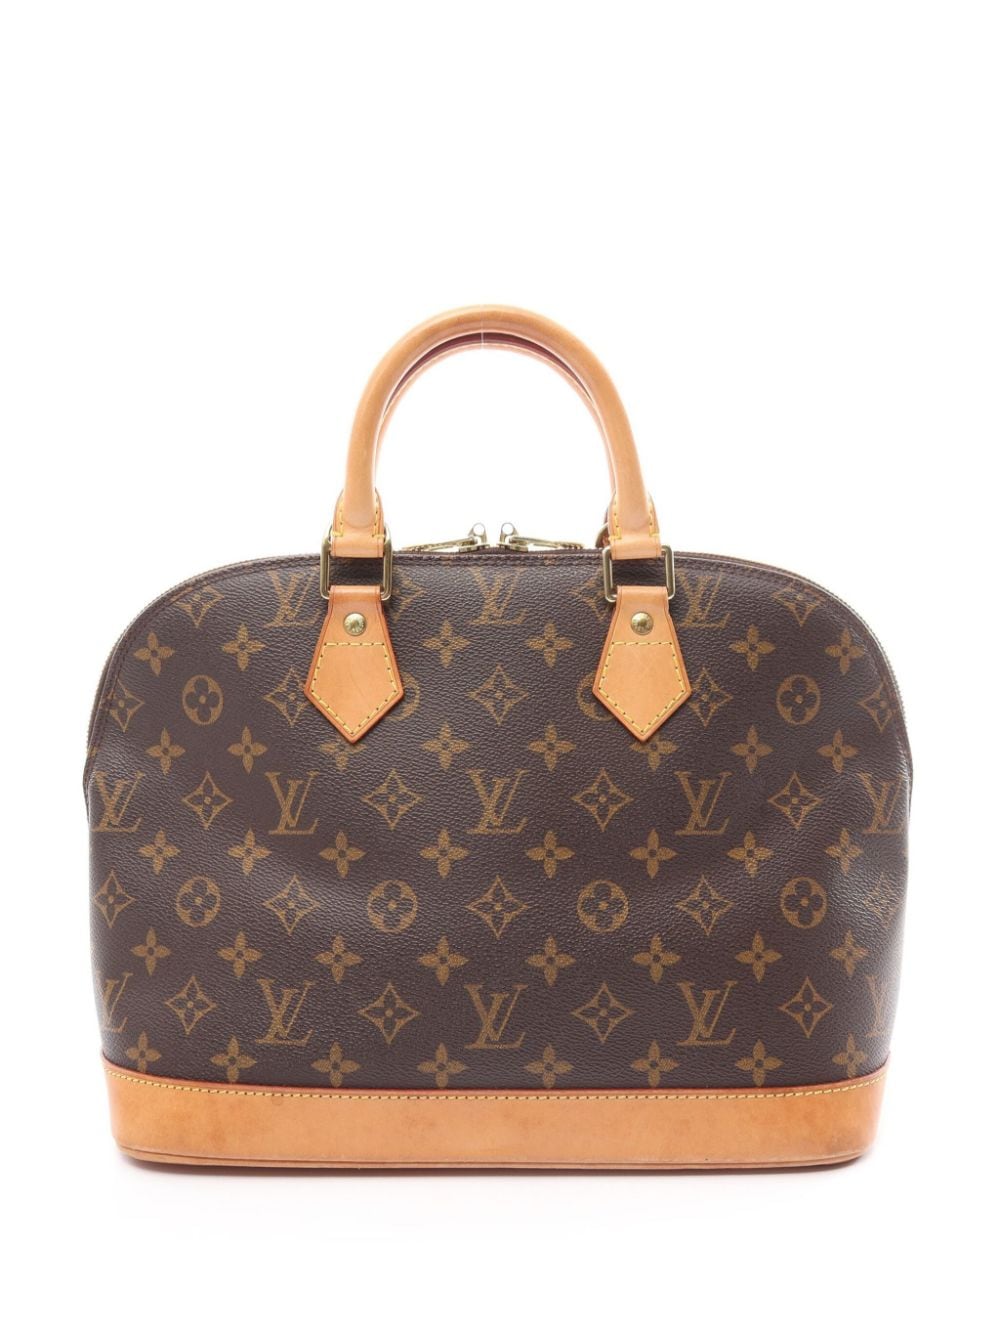 Pre-owned Louis Vuitton 2001 Alma Pm Handbag In Brown